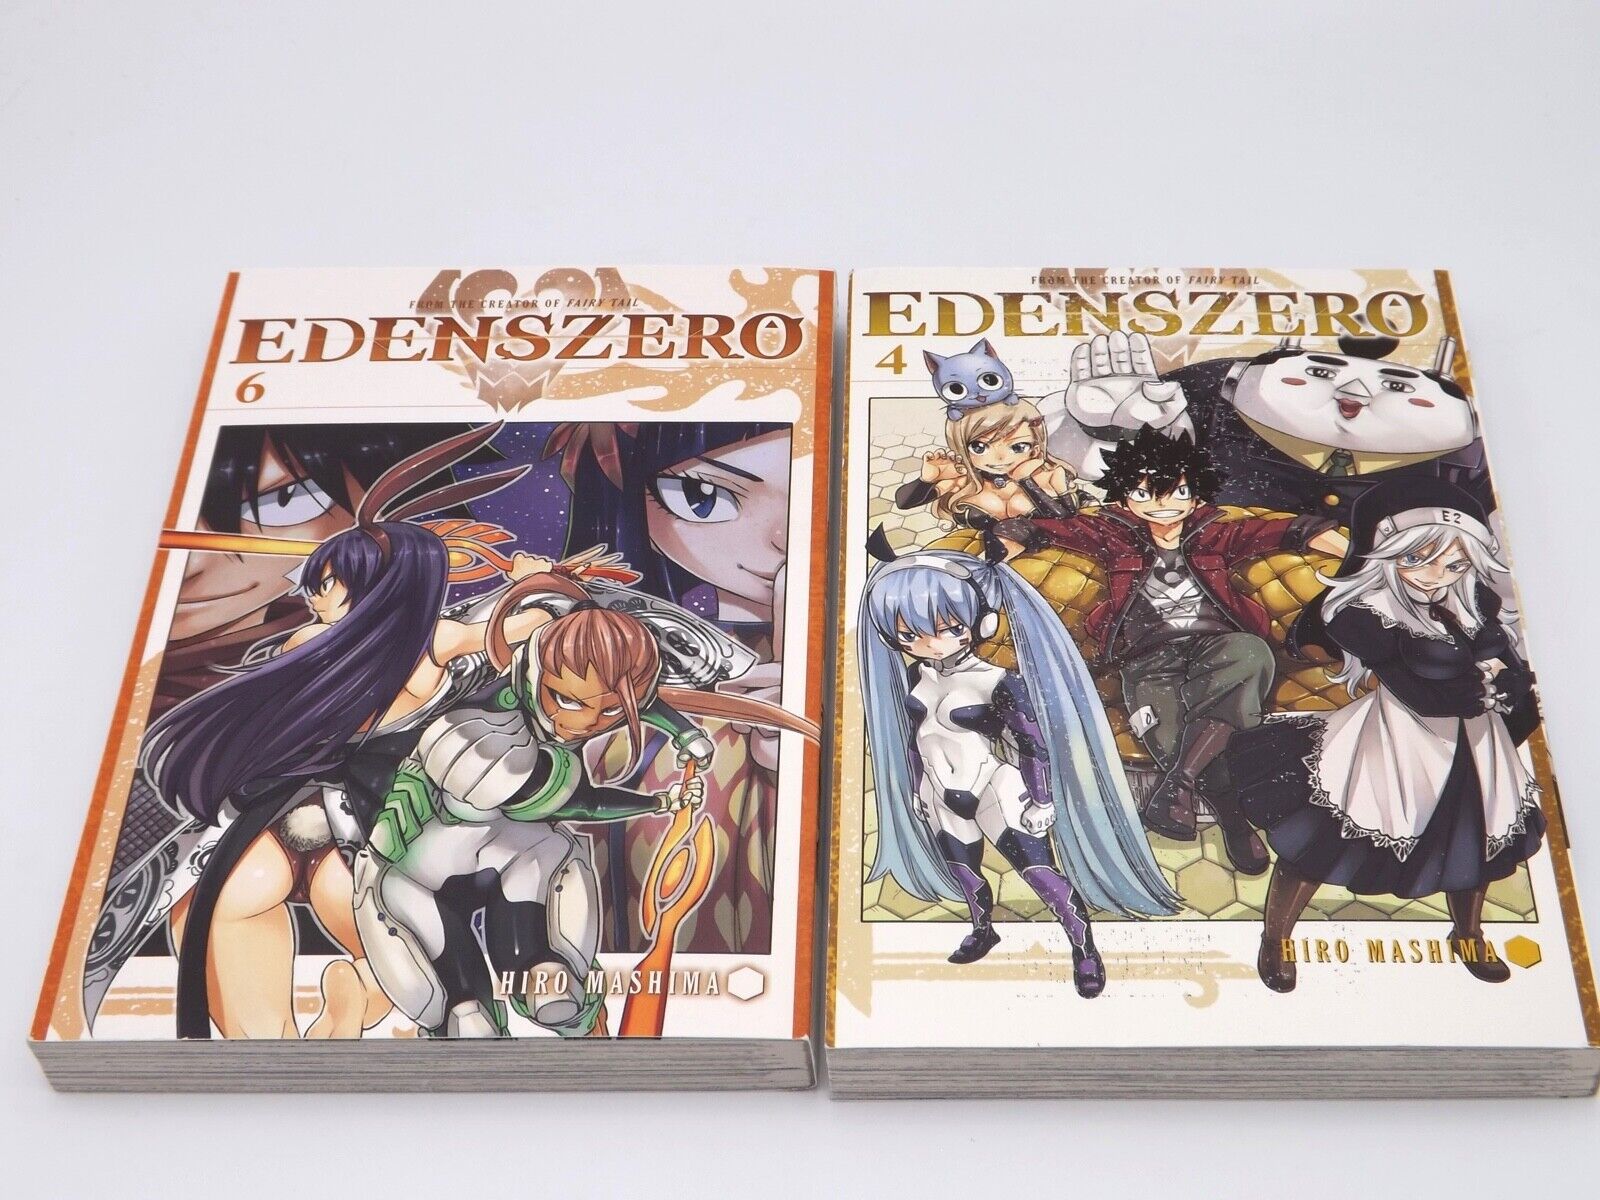 Manga Edens Zero Edenszero English Volumes 4 & 6 Hiro Mashima Very Good Lot of 2